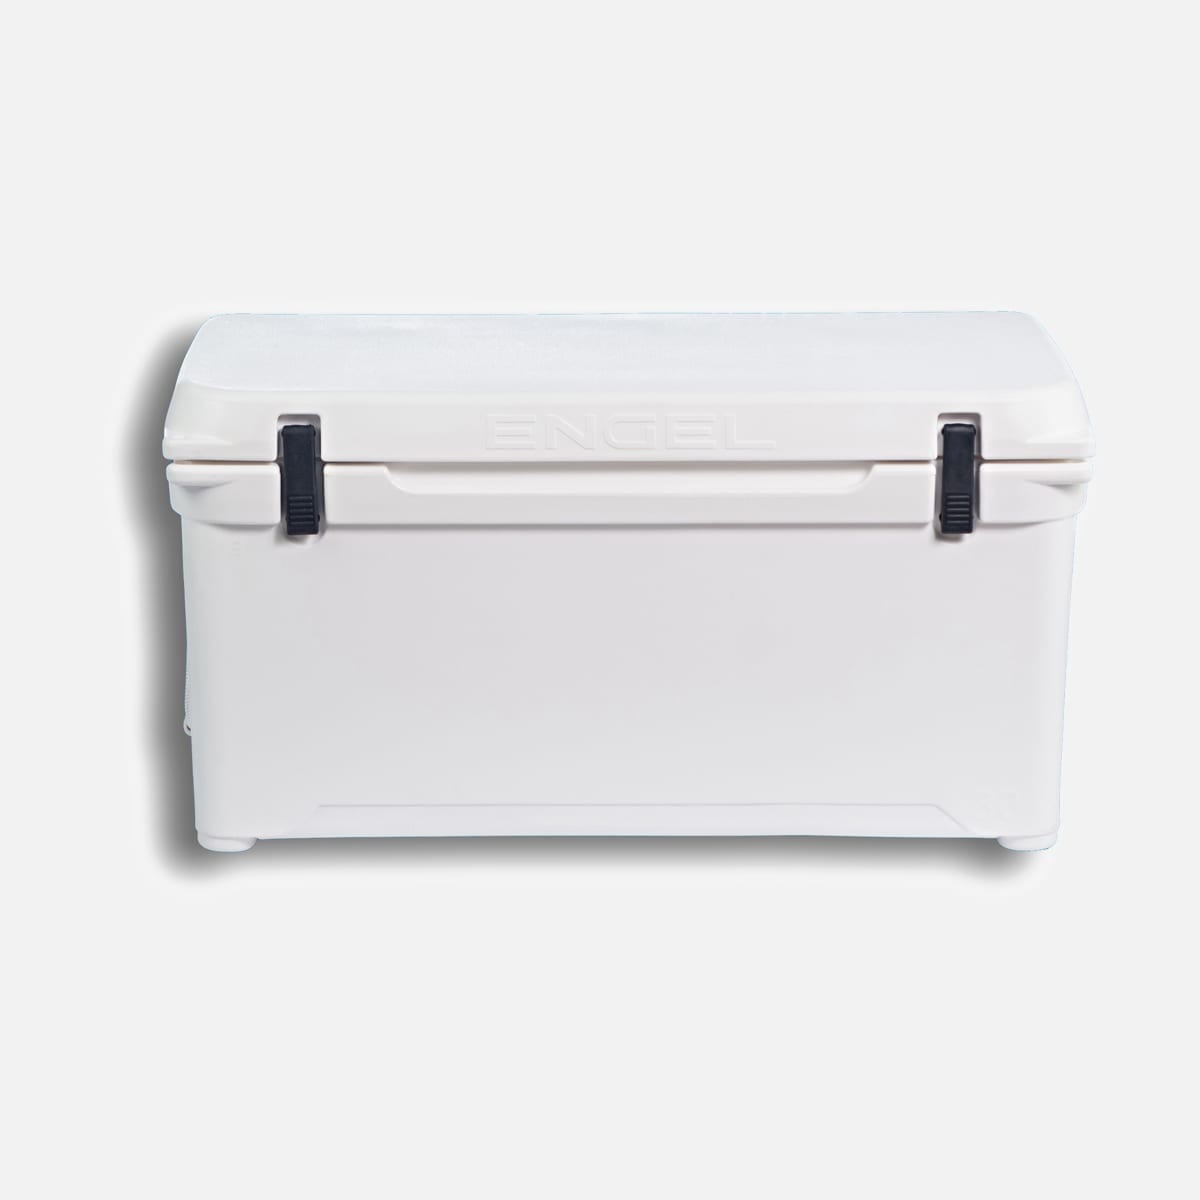 Engel Ice Box 70LT - WHITE Inc Basket